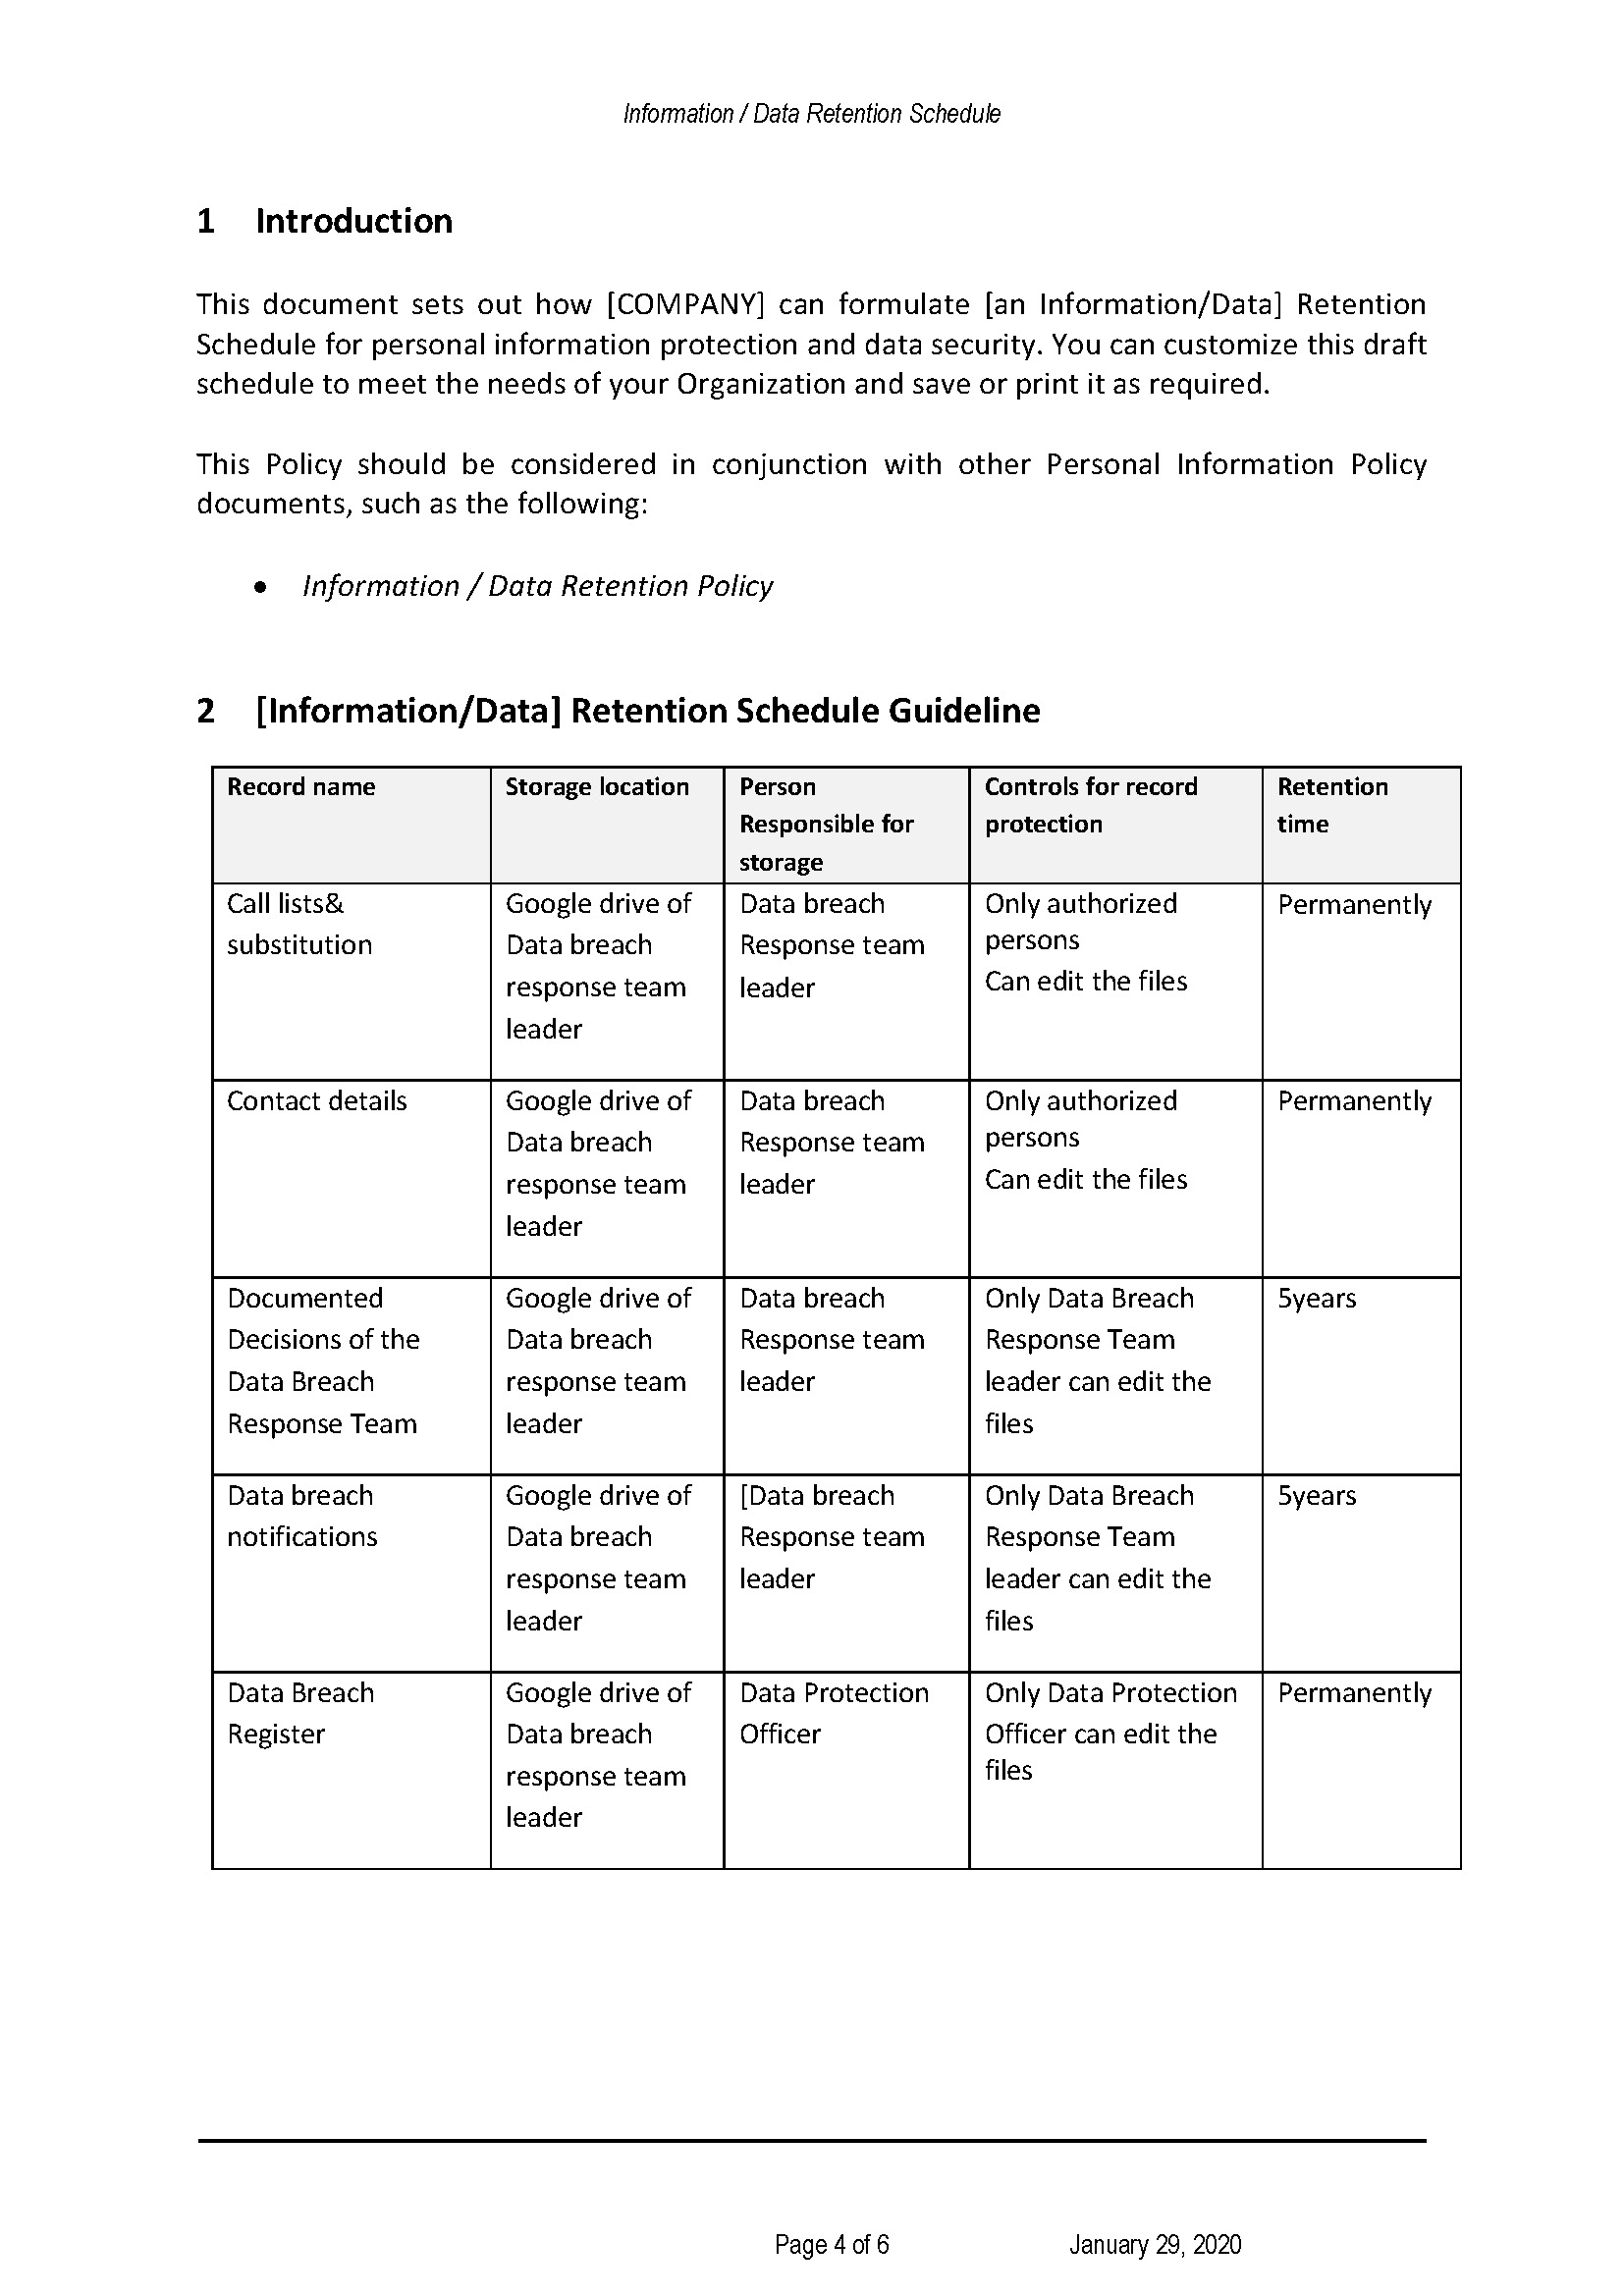 ccpa information retention schedule template